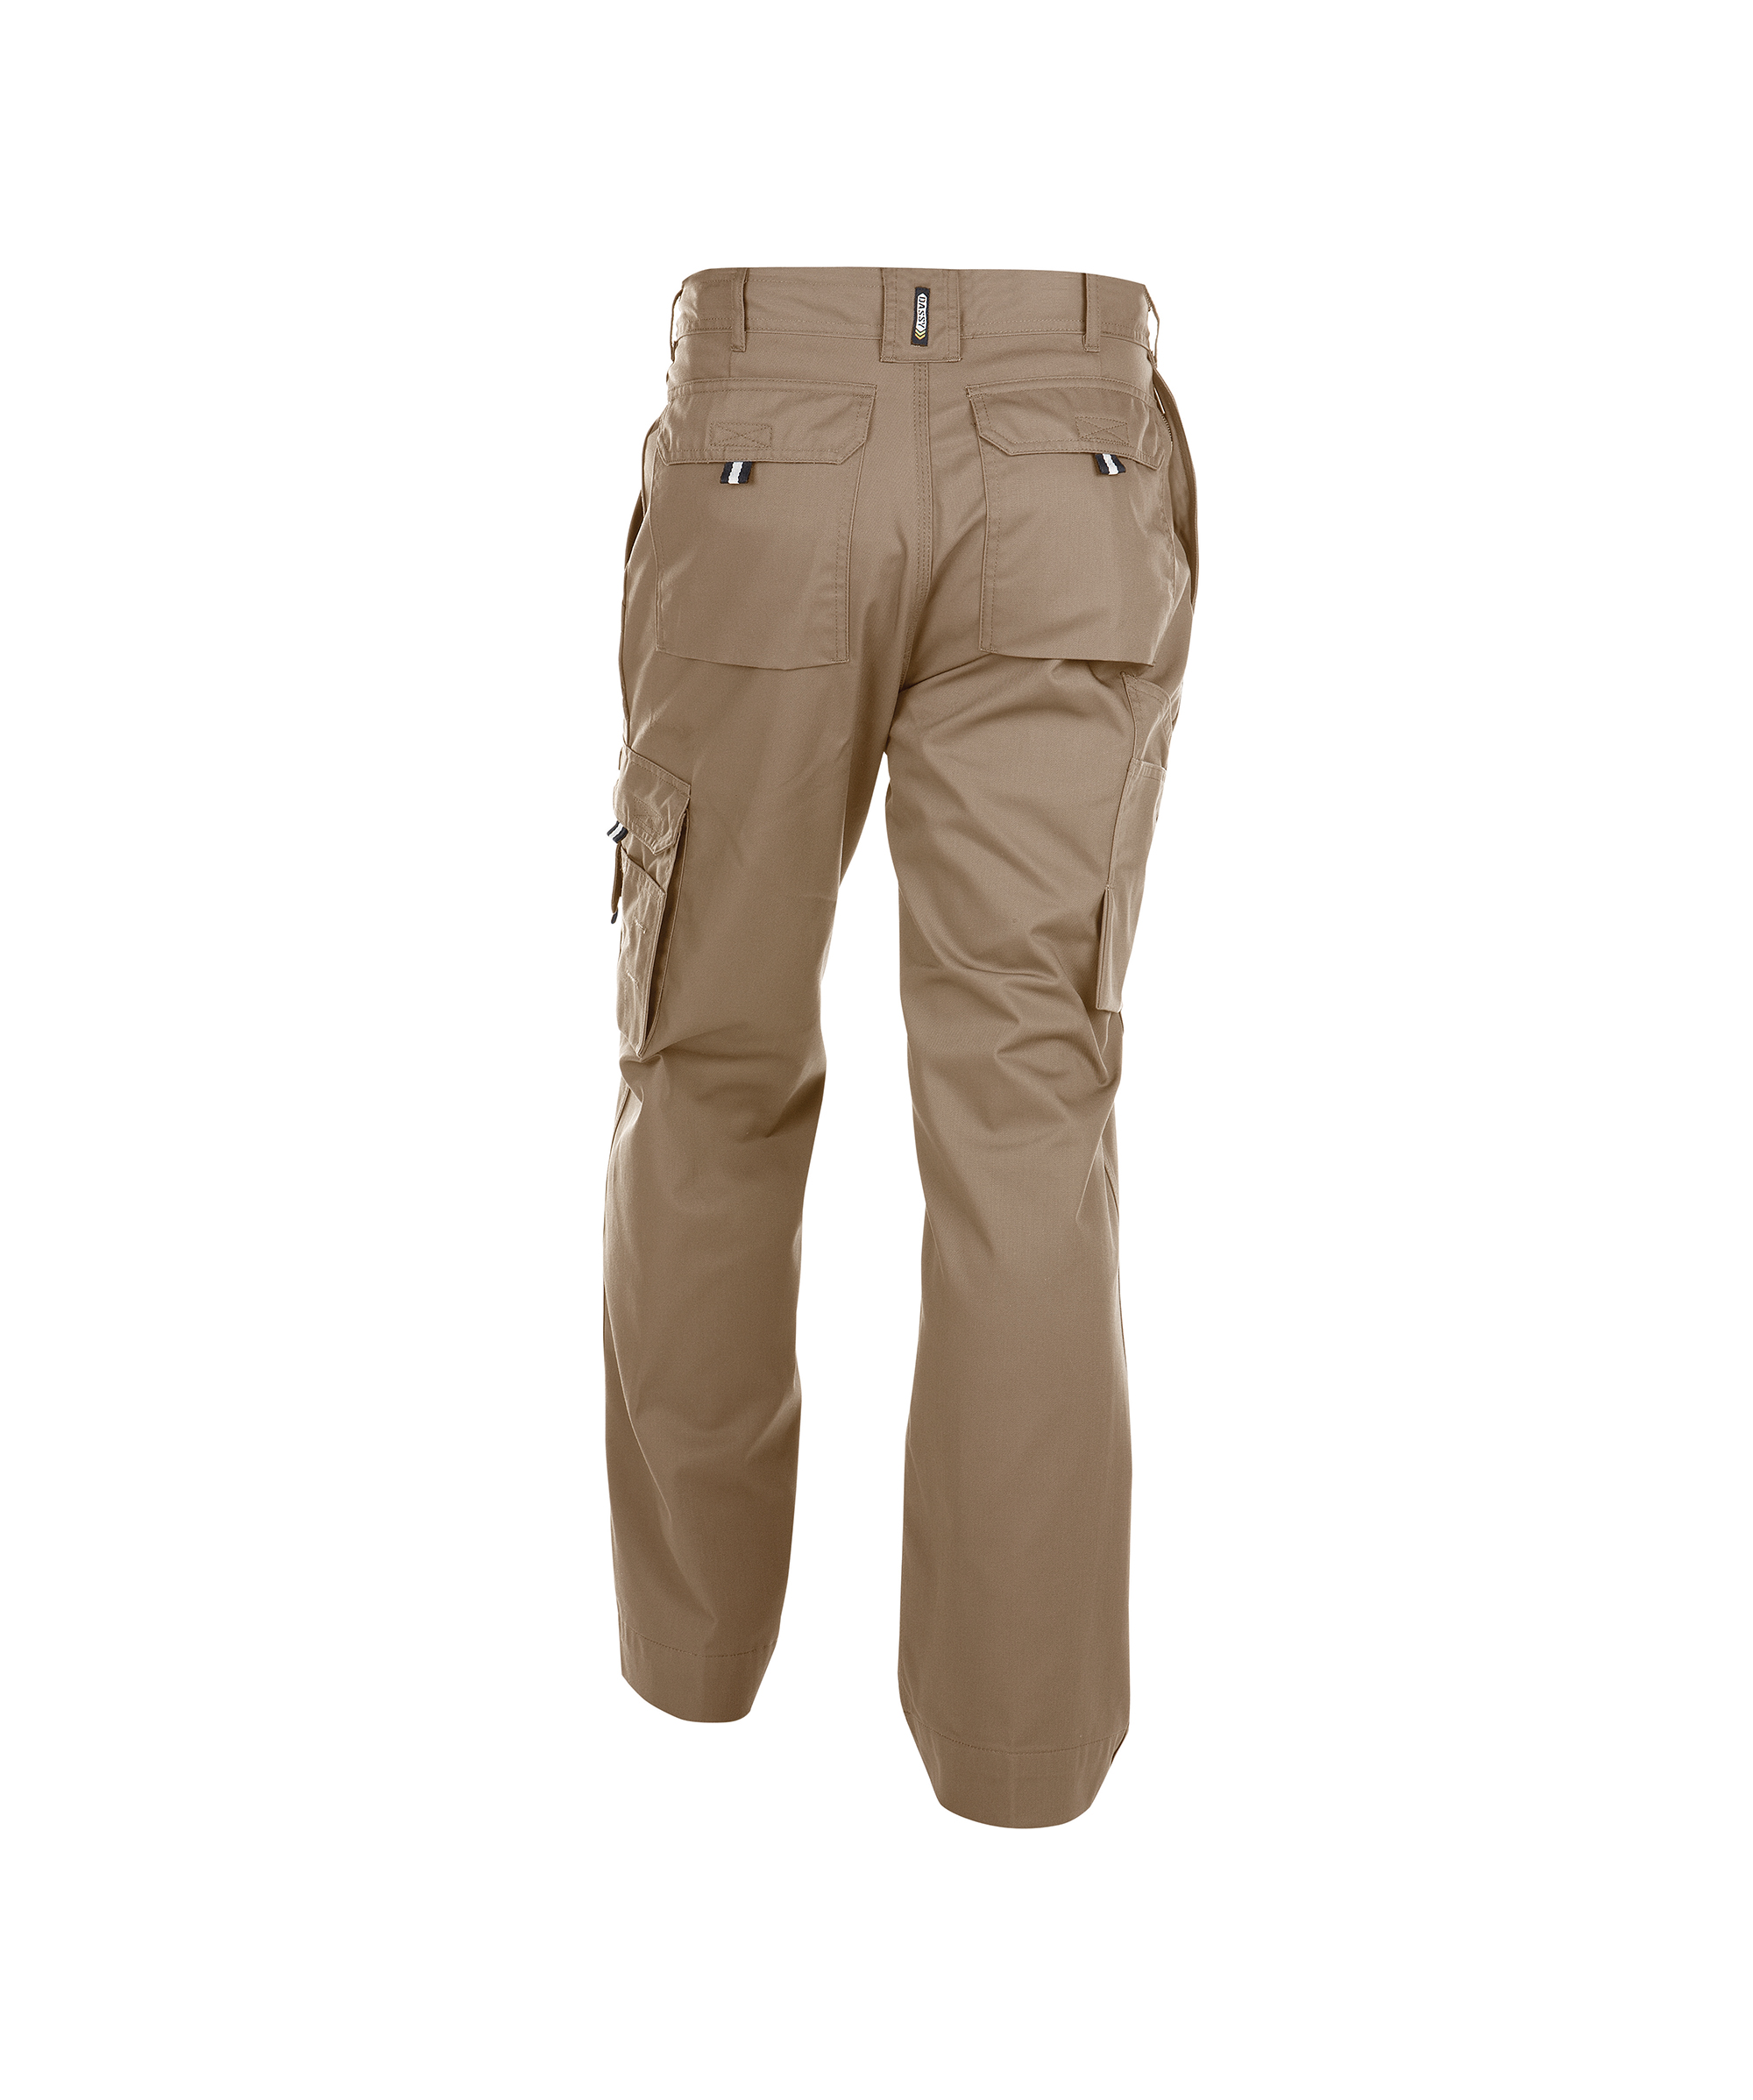 LIVERPOOL_Work-trousers_beige_BACK.jpg